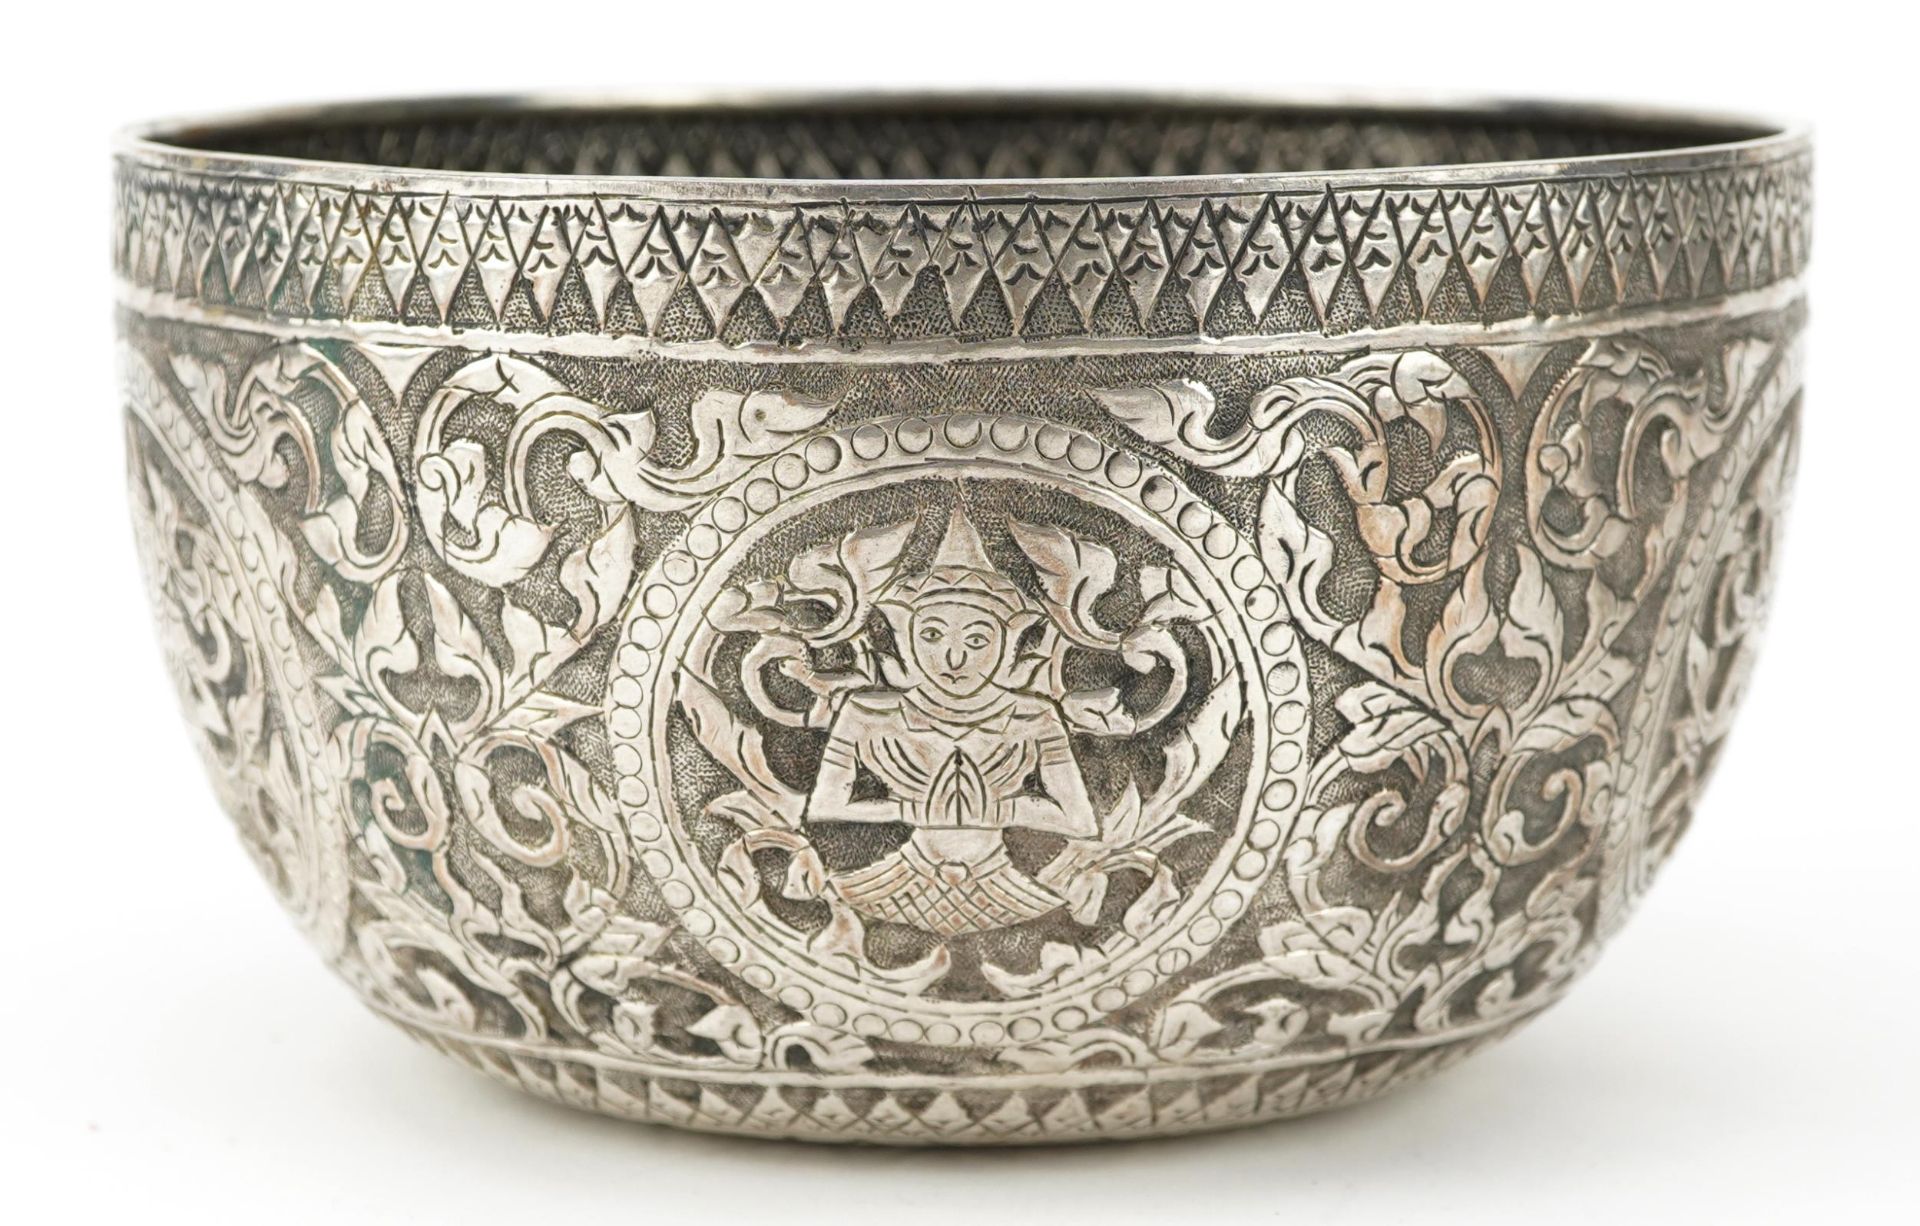 Tibetan white metal bowl embossed with deities, 15.5cm in diameter, 171.0g